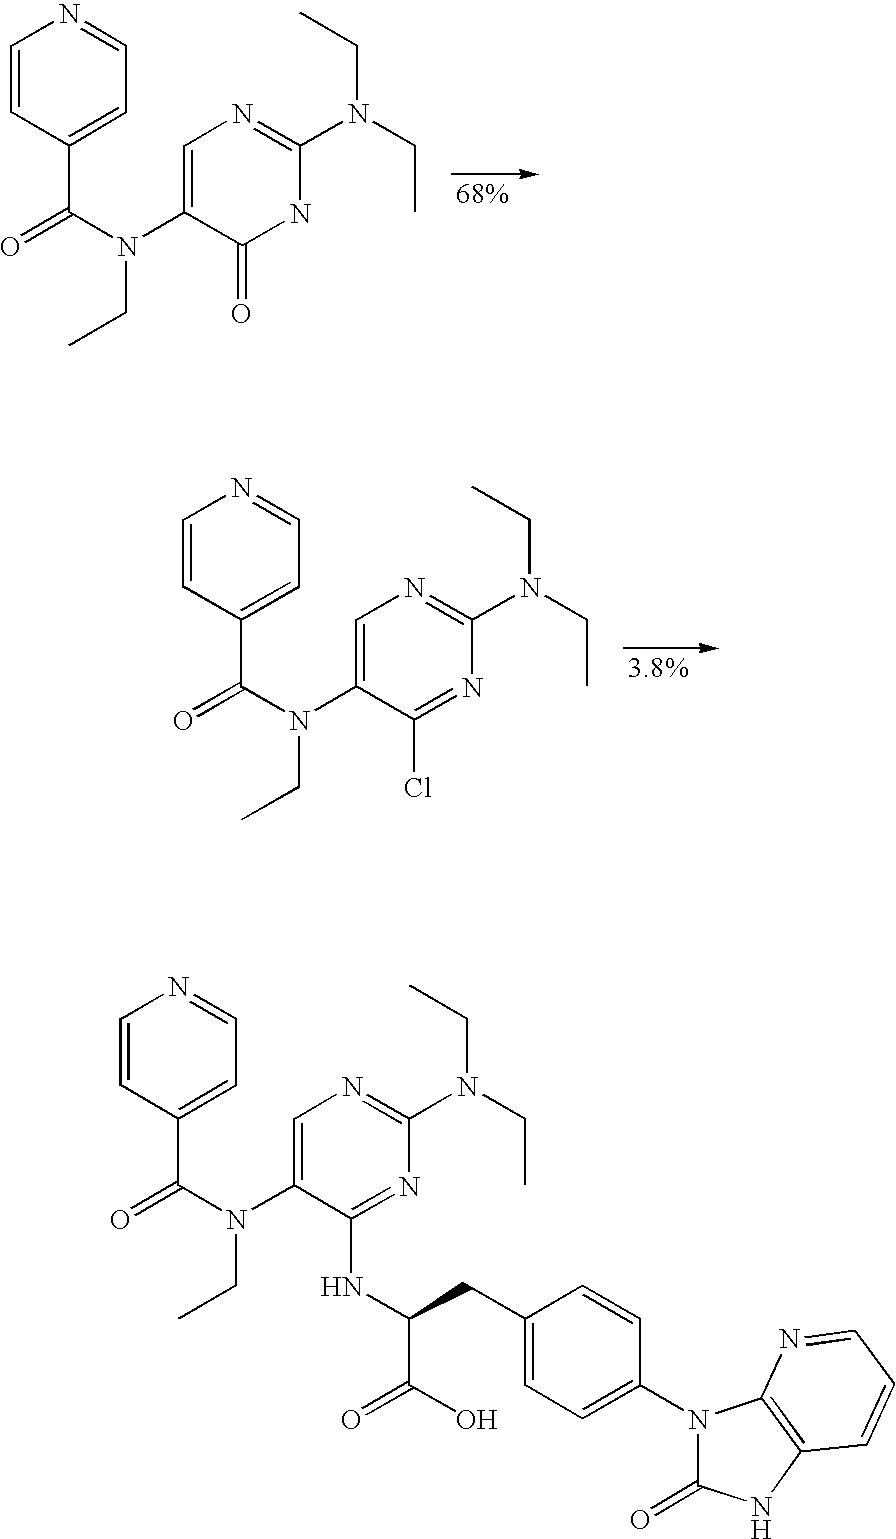 Production method of diaminopyrimidine compounds